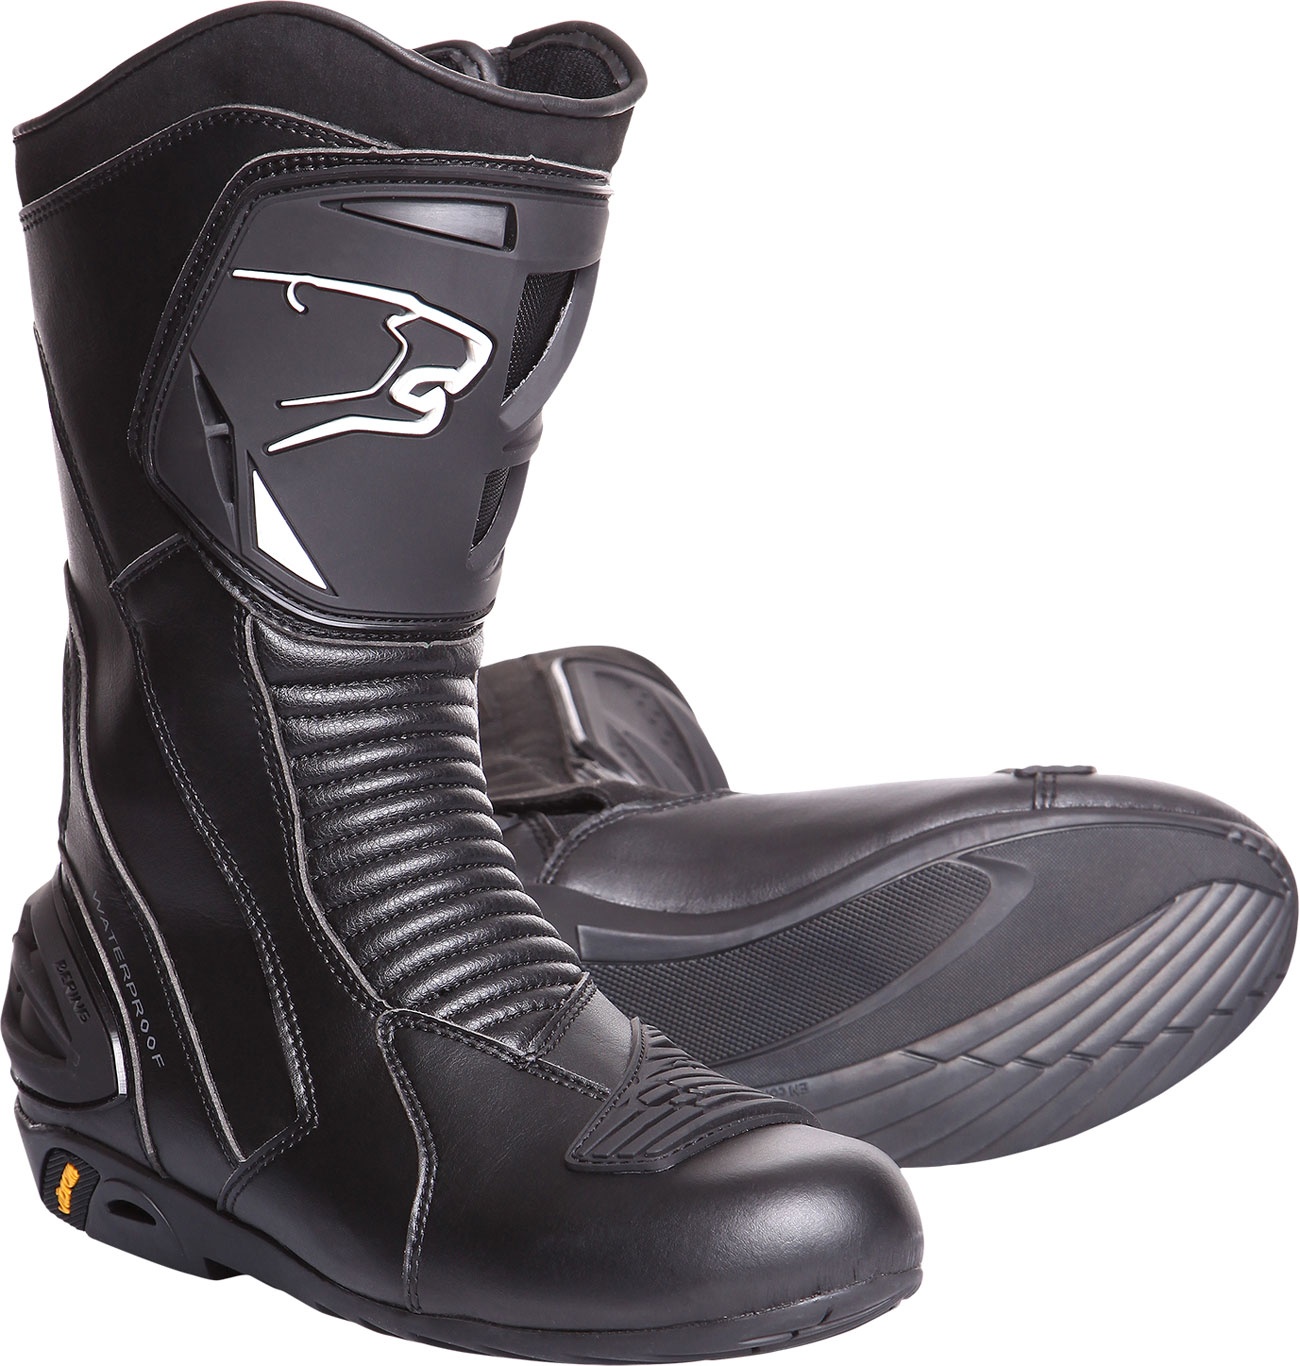 Bering X-Road, boots - Noir - T40